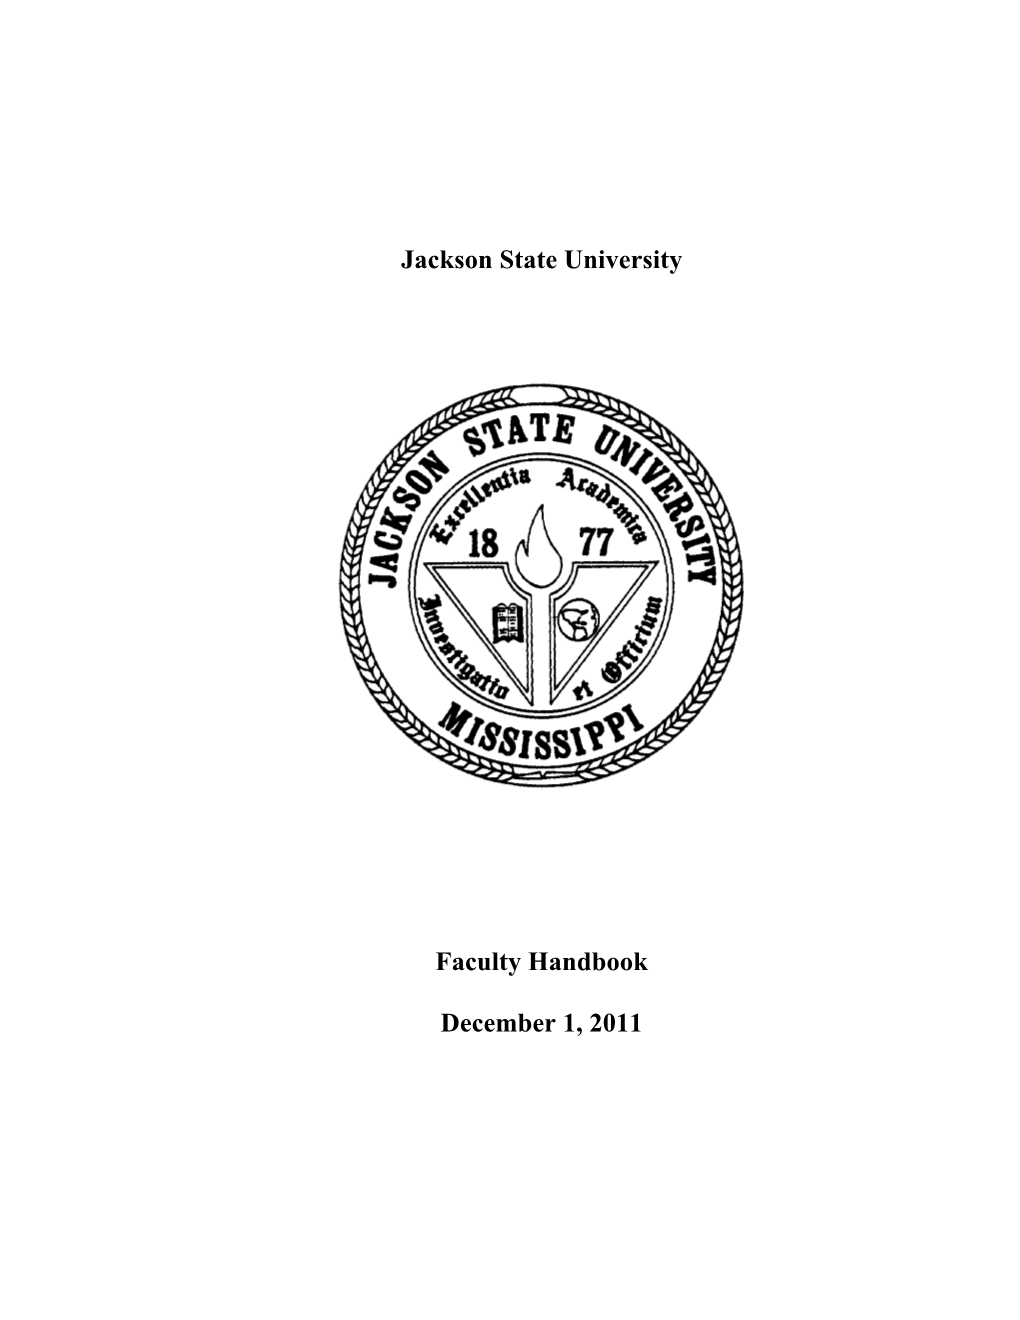 Jackson State University Faculty Handbook December 1, 2011